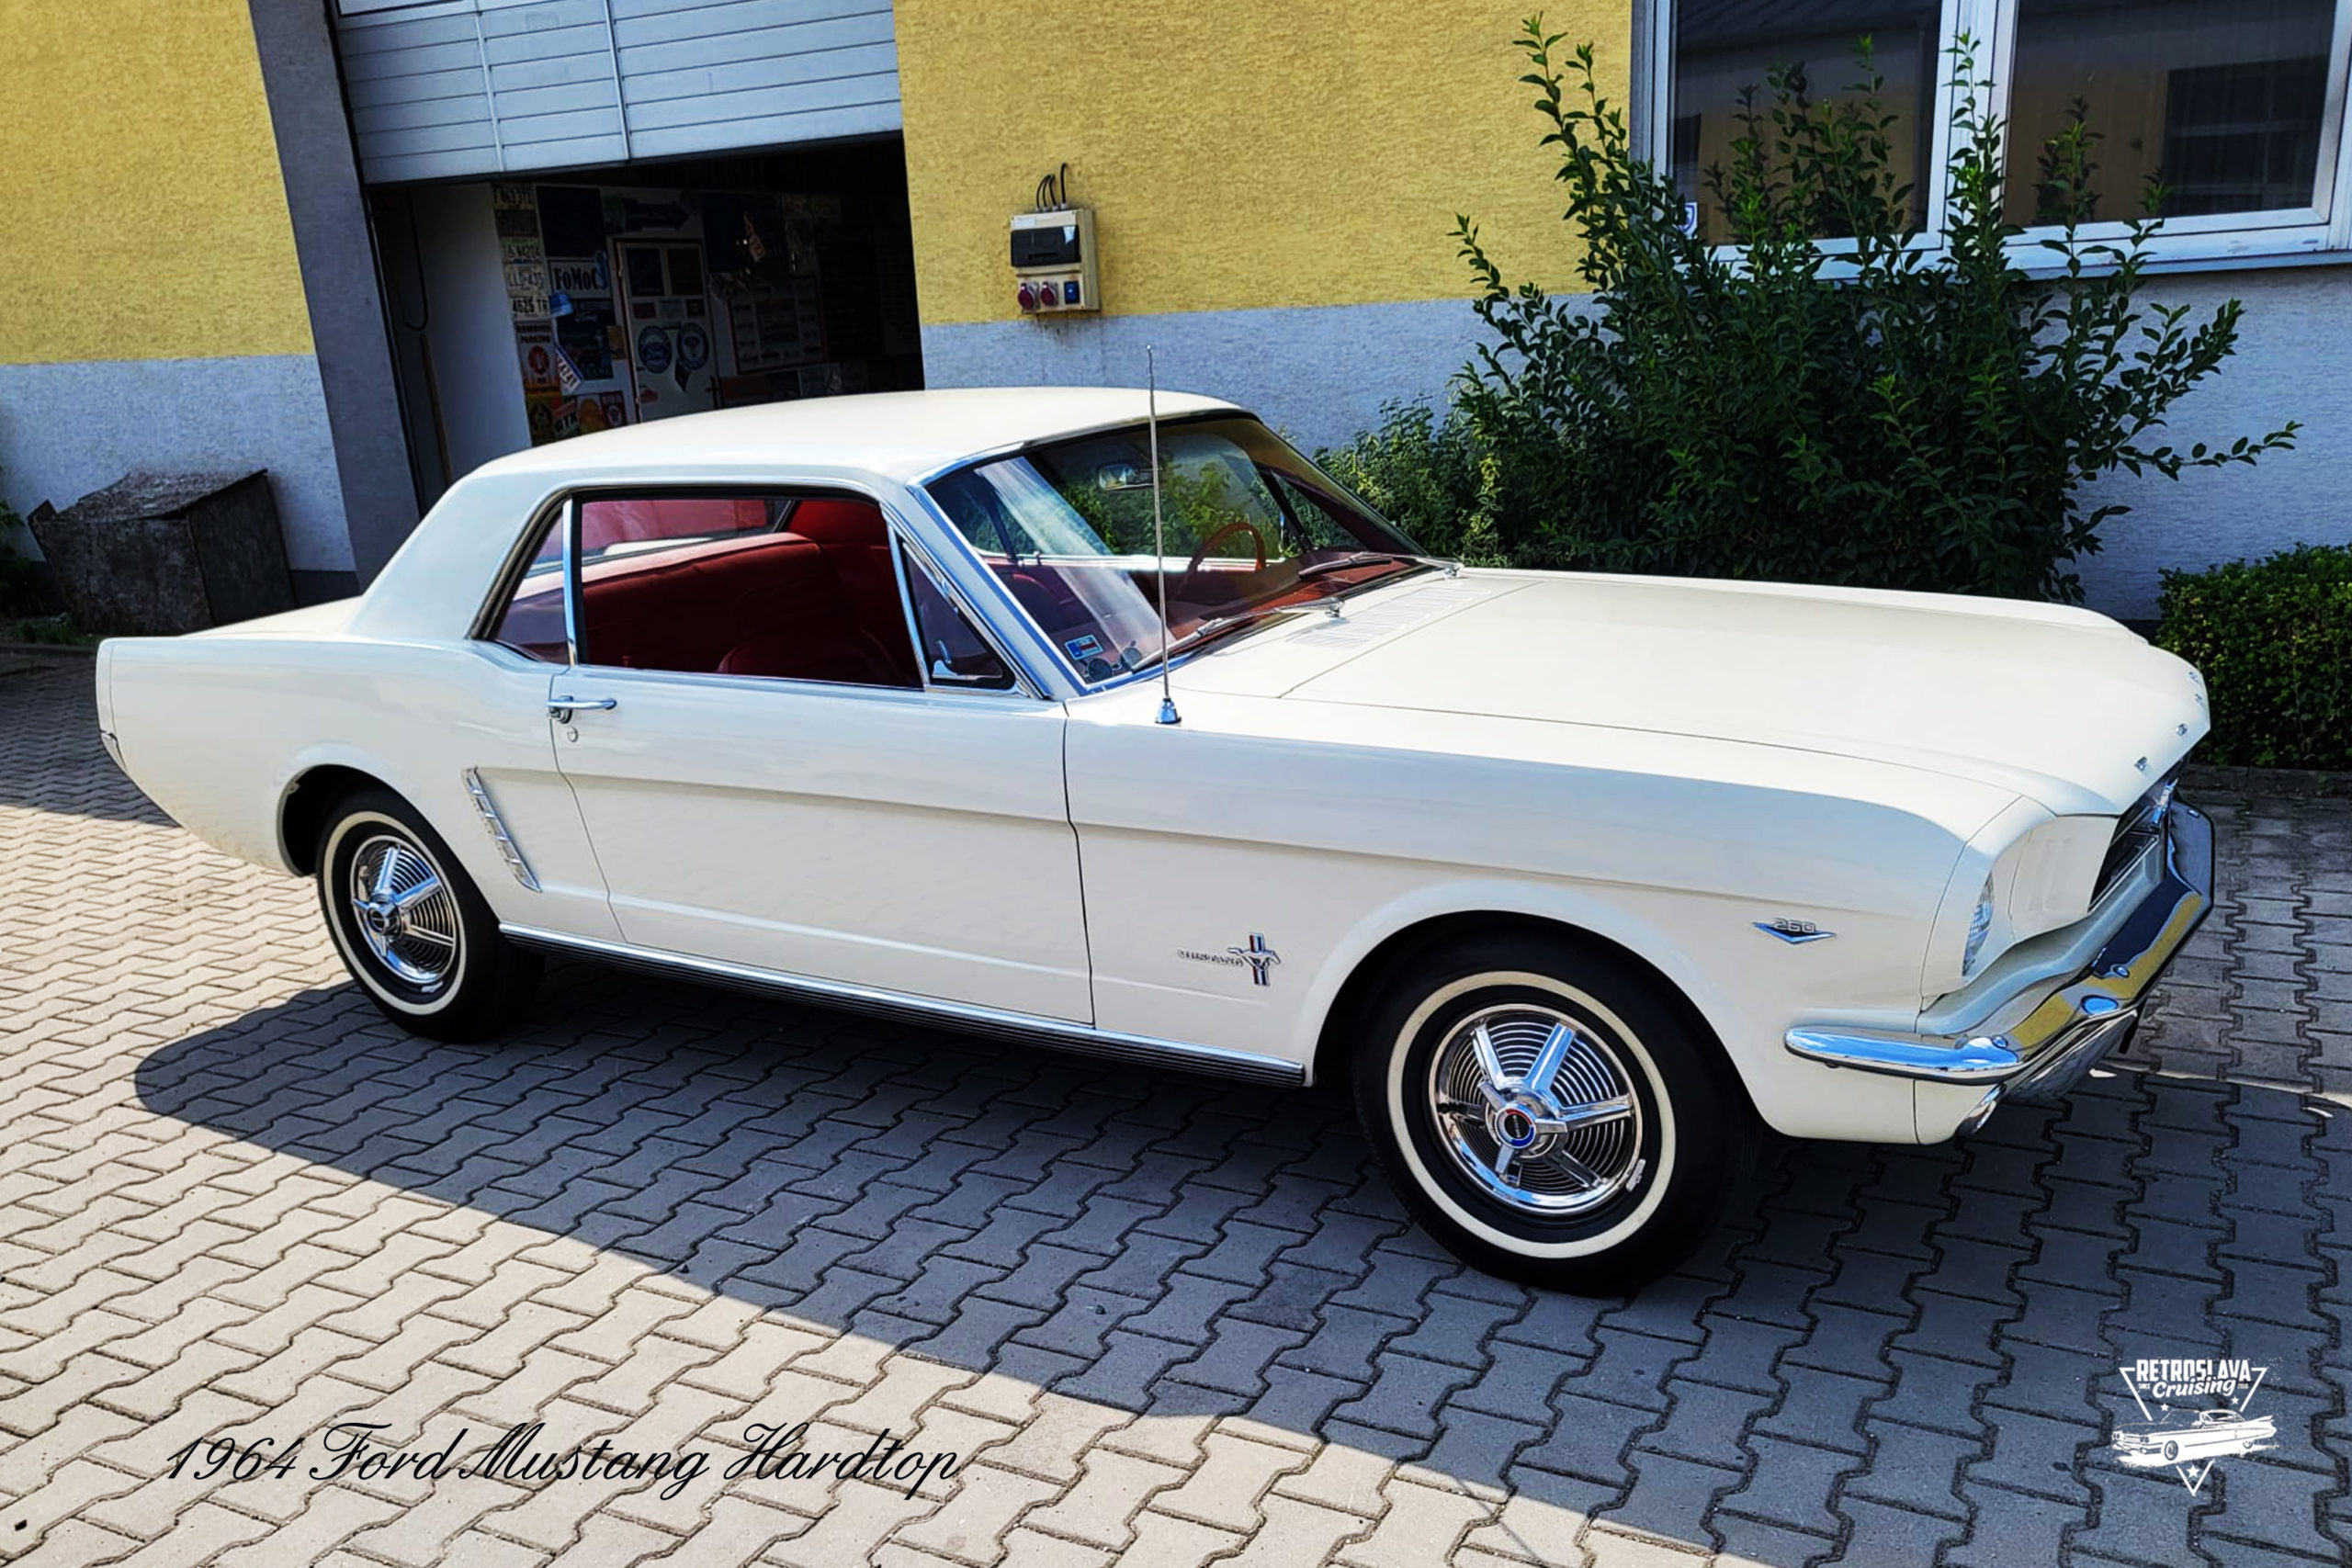 1964 Ford Mustang Hardtop